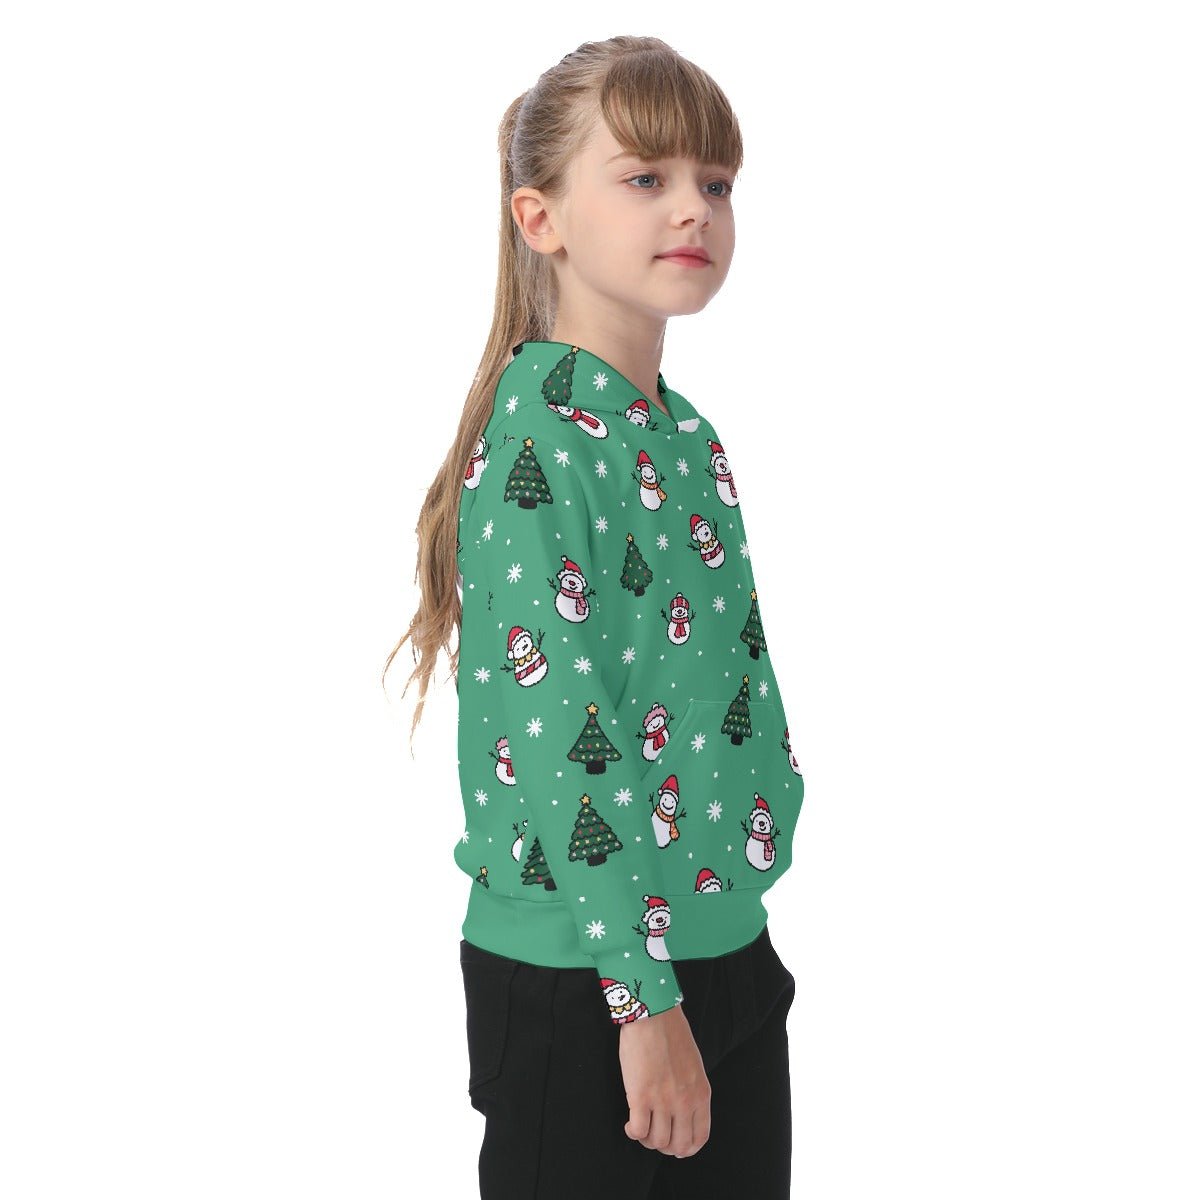 Kid's Fleece Christmas Hoodie- Green Snowman - Festive Style